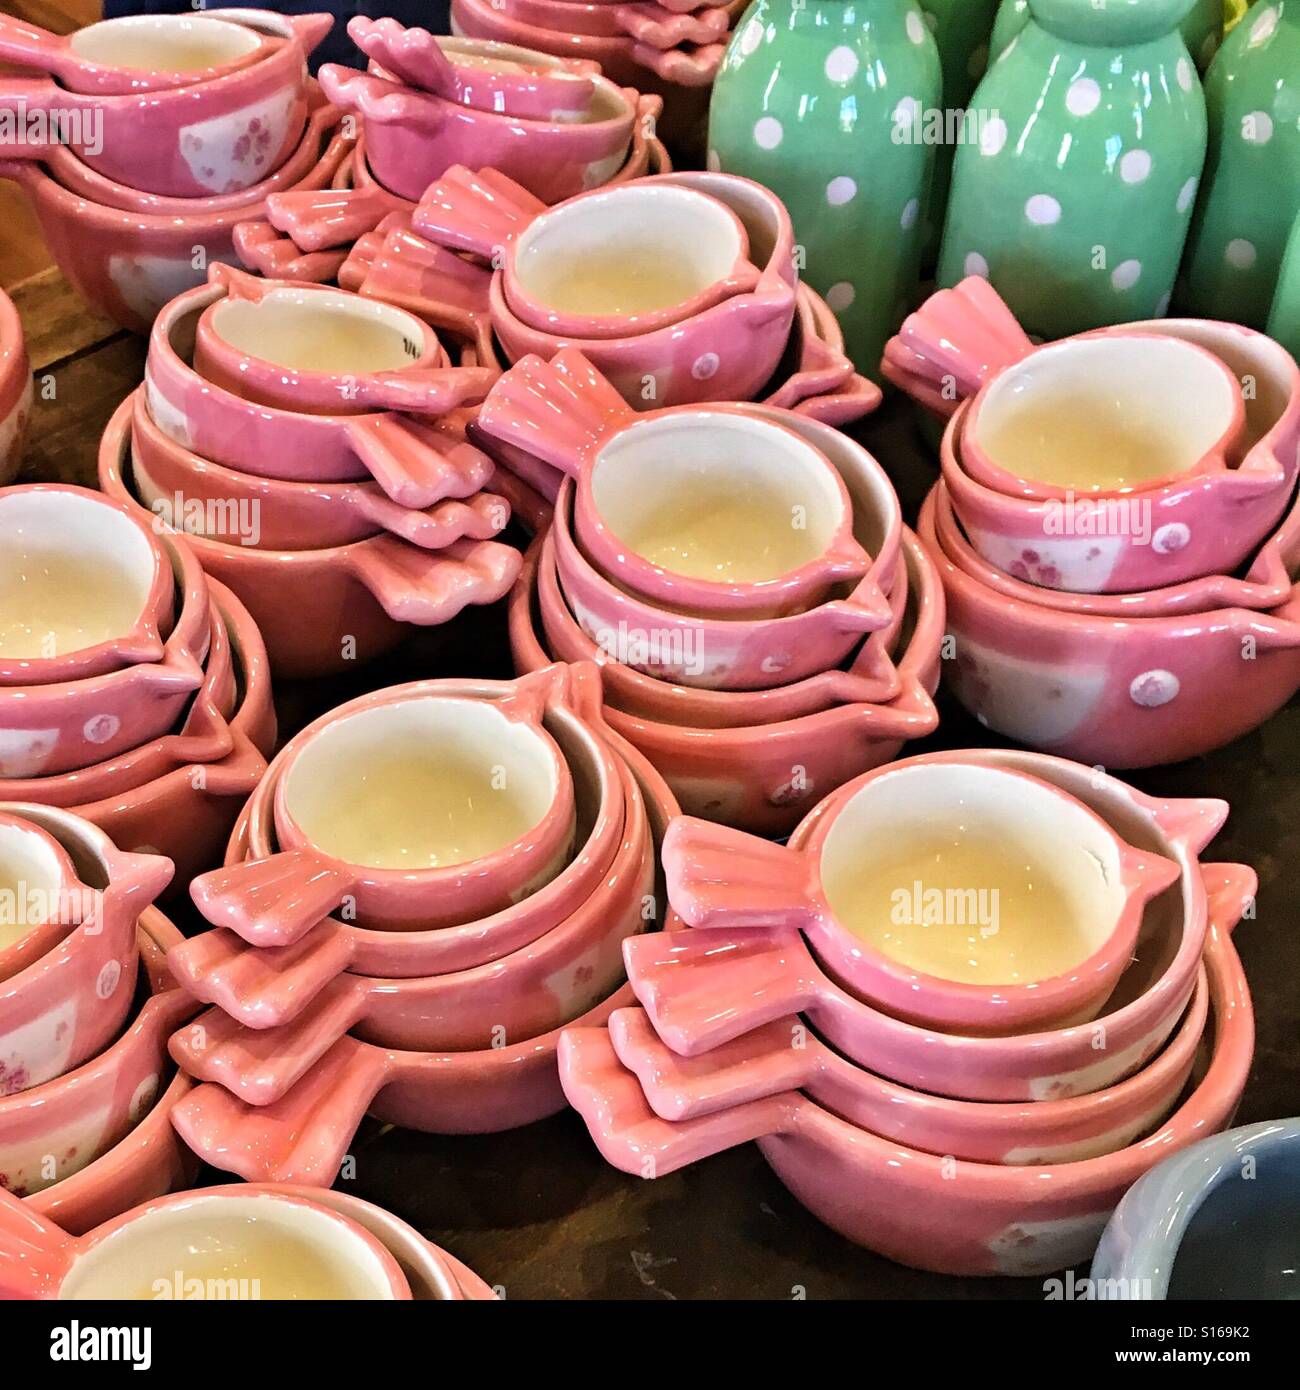 https://c8.alamy.com/comp/S169K2/pink-and-green-kitchen-wares-S169K2.jpg